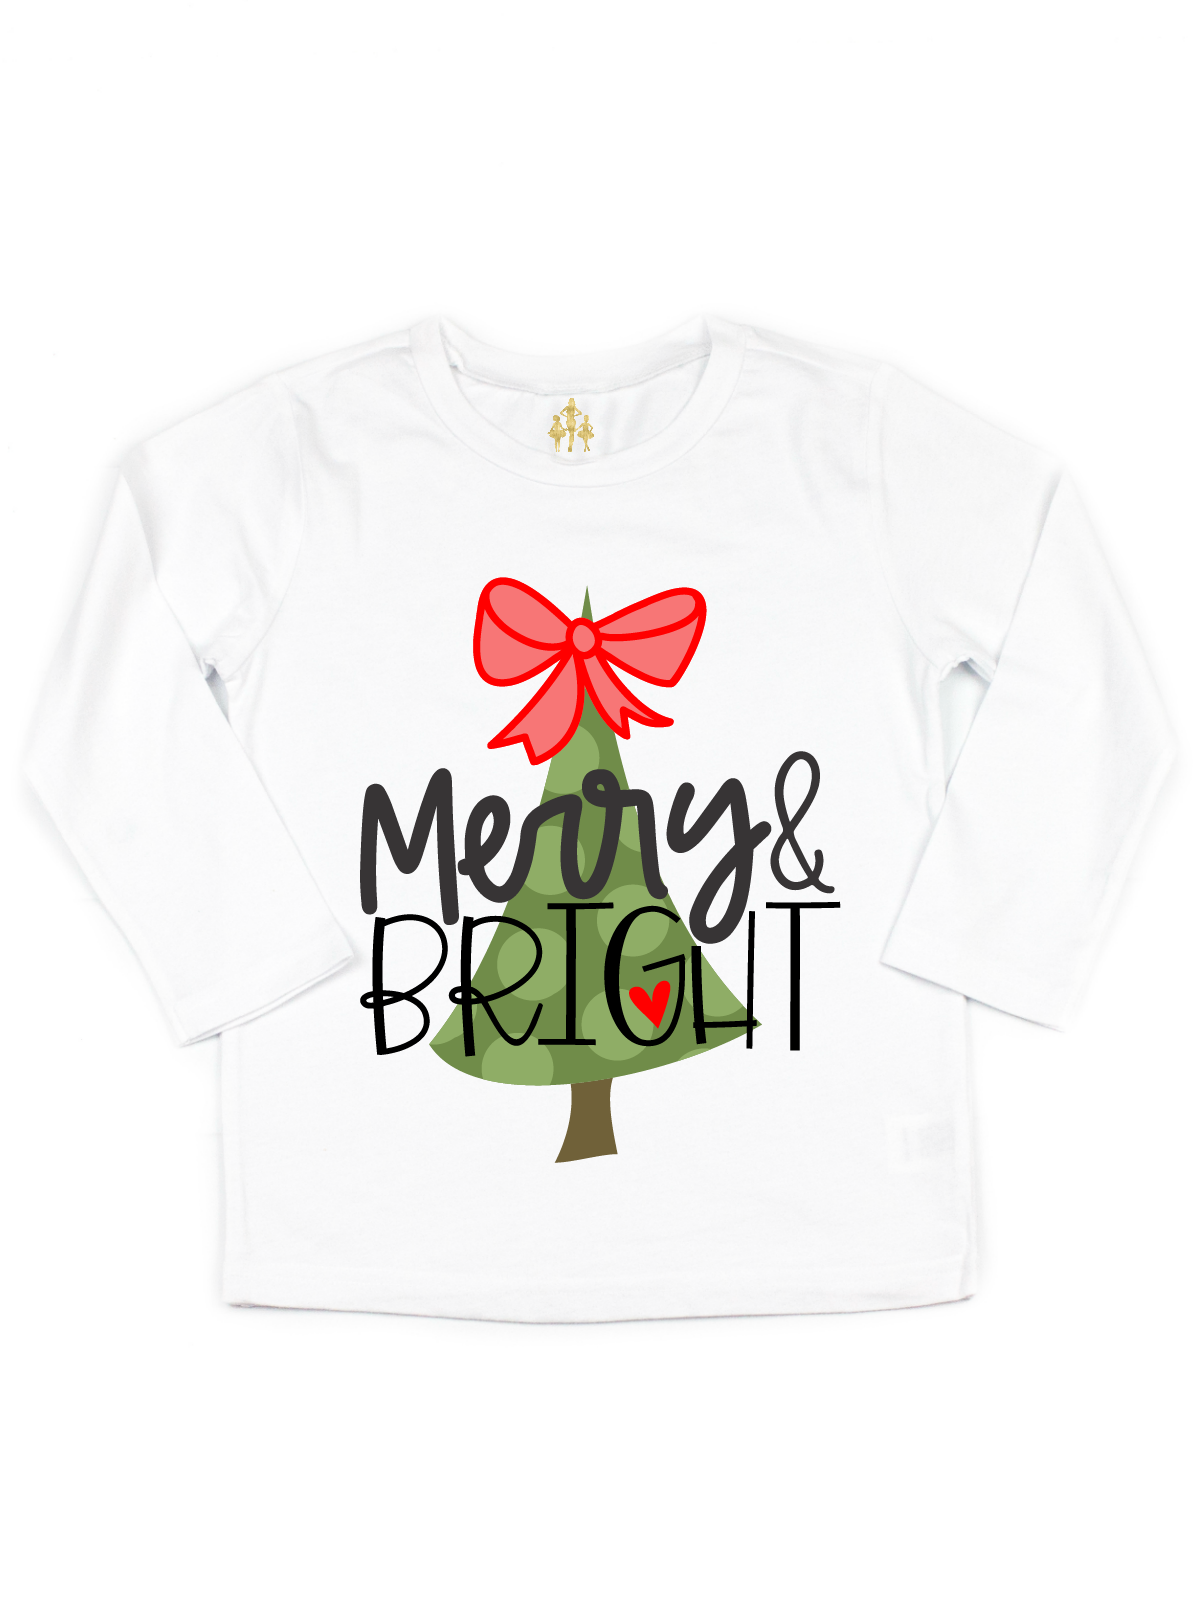 Merry & Bright Girls Christmas Shirt